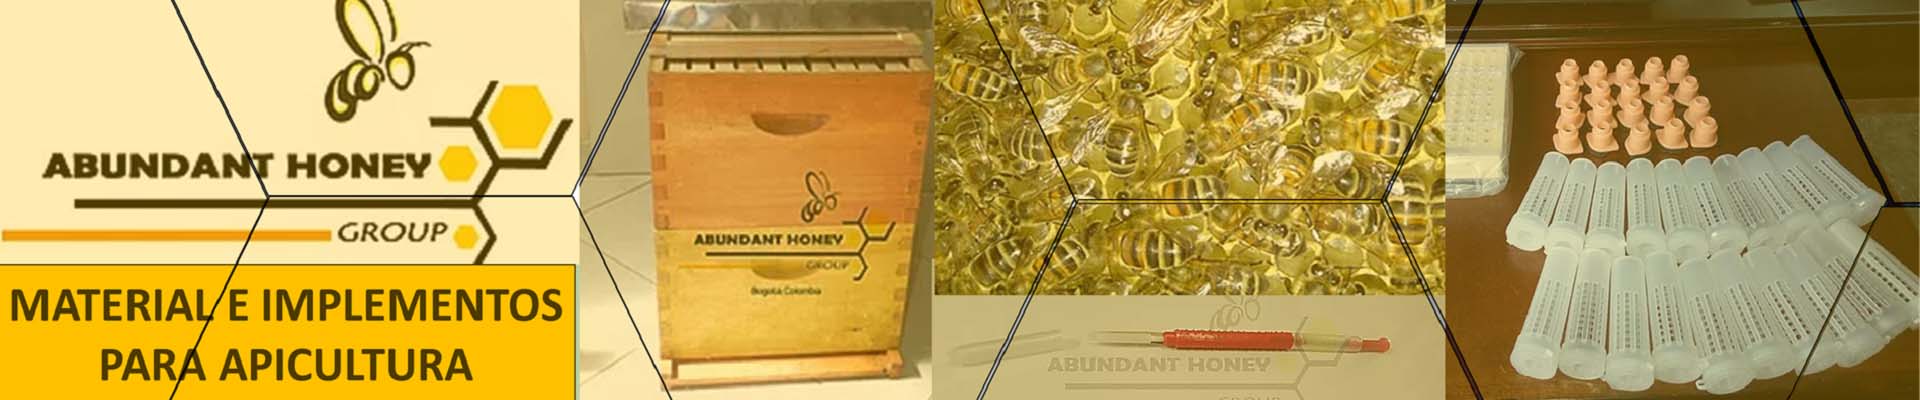 Apiarios Abundant Honey Group